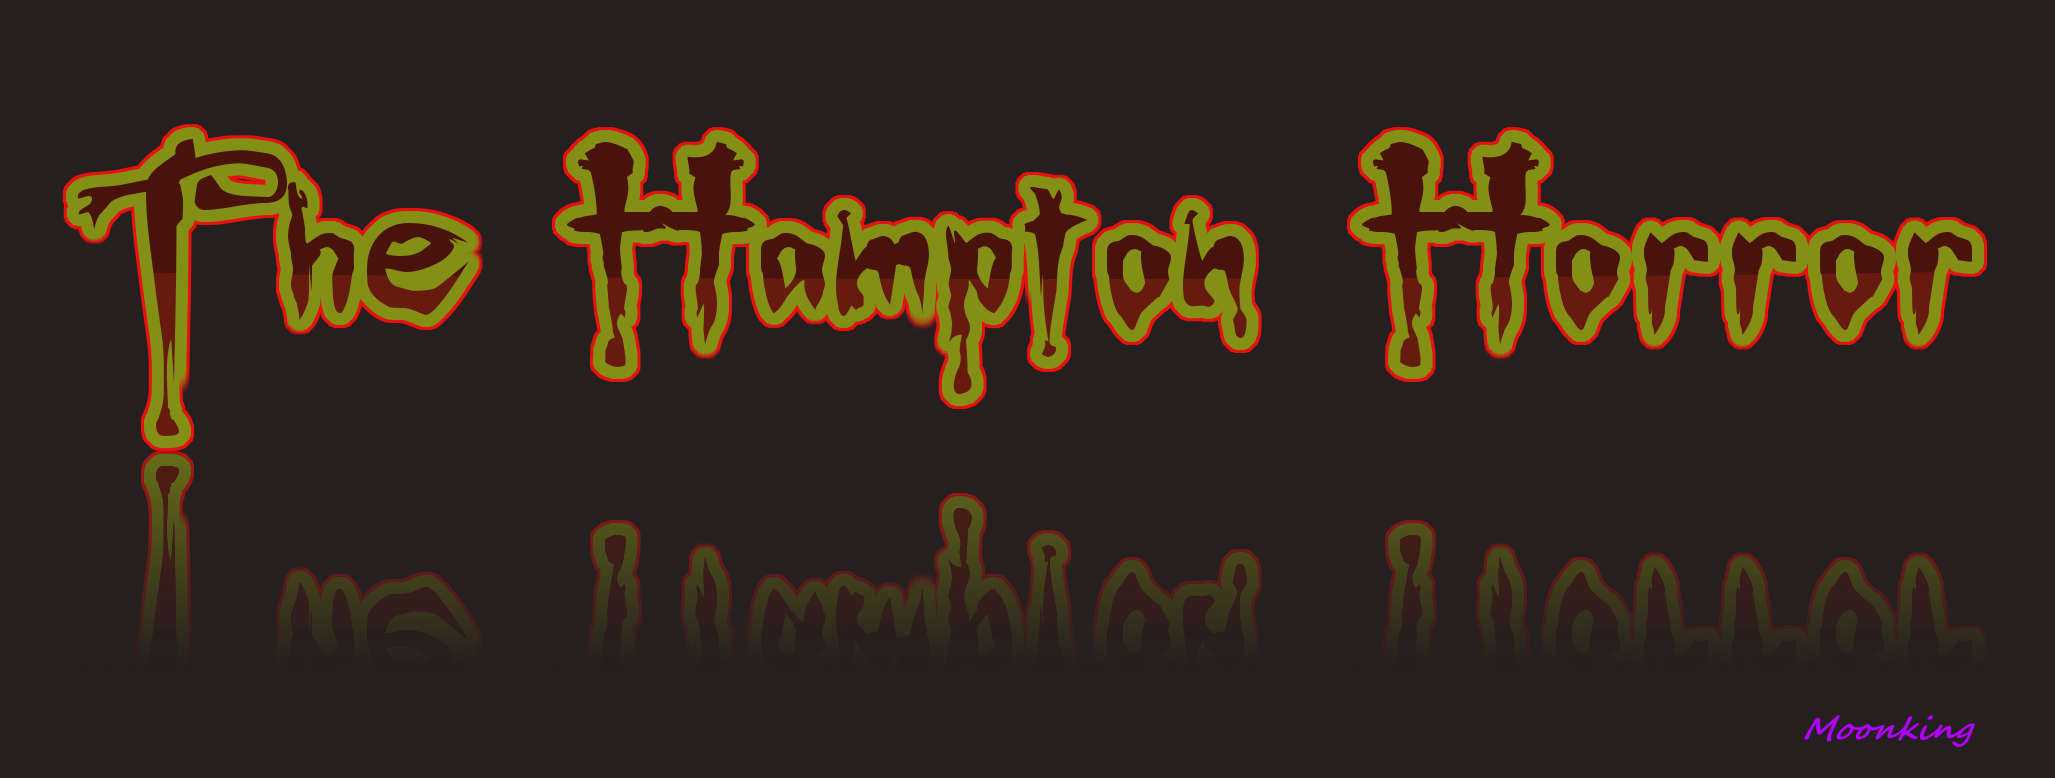 6630357 main 000 Hampton Horror Cover MK